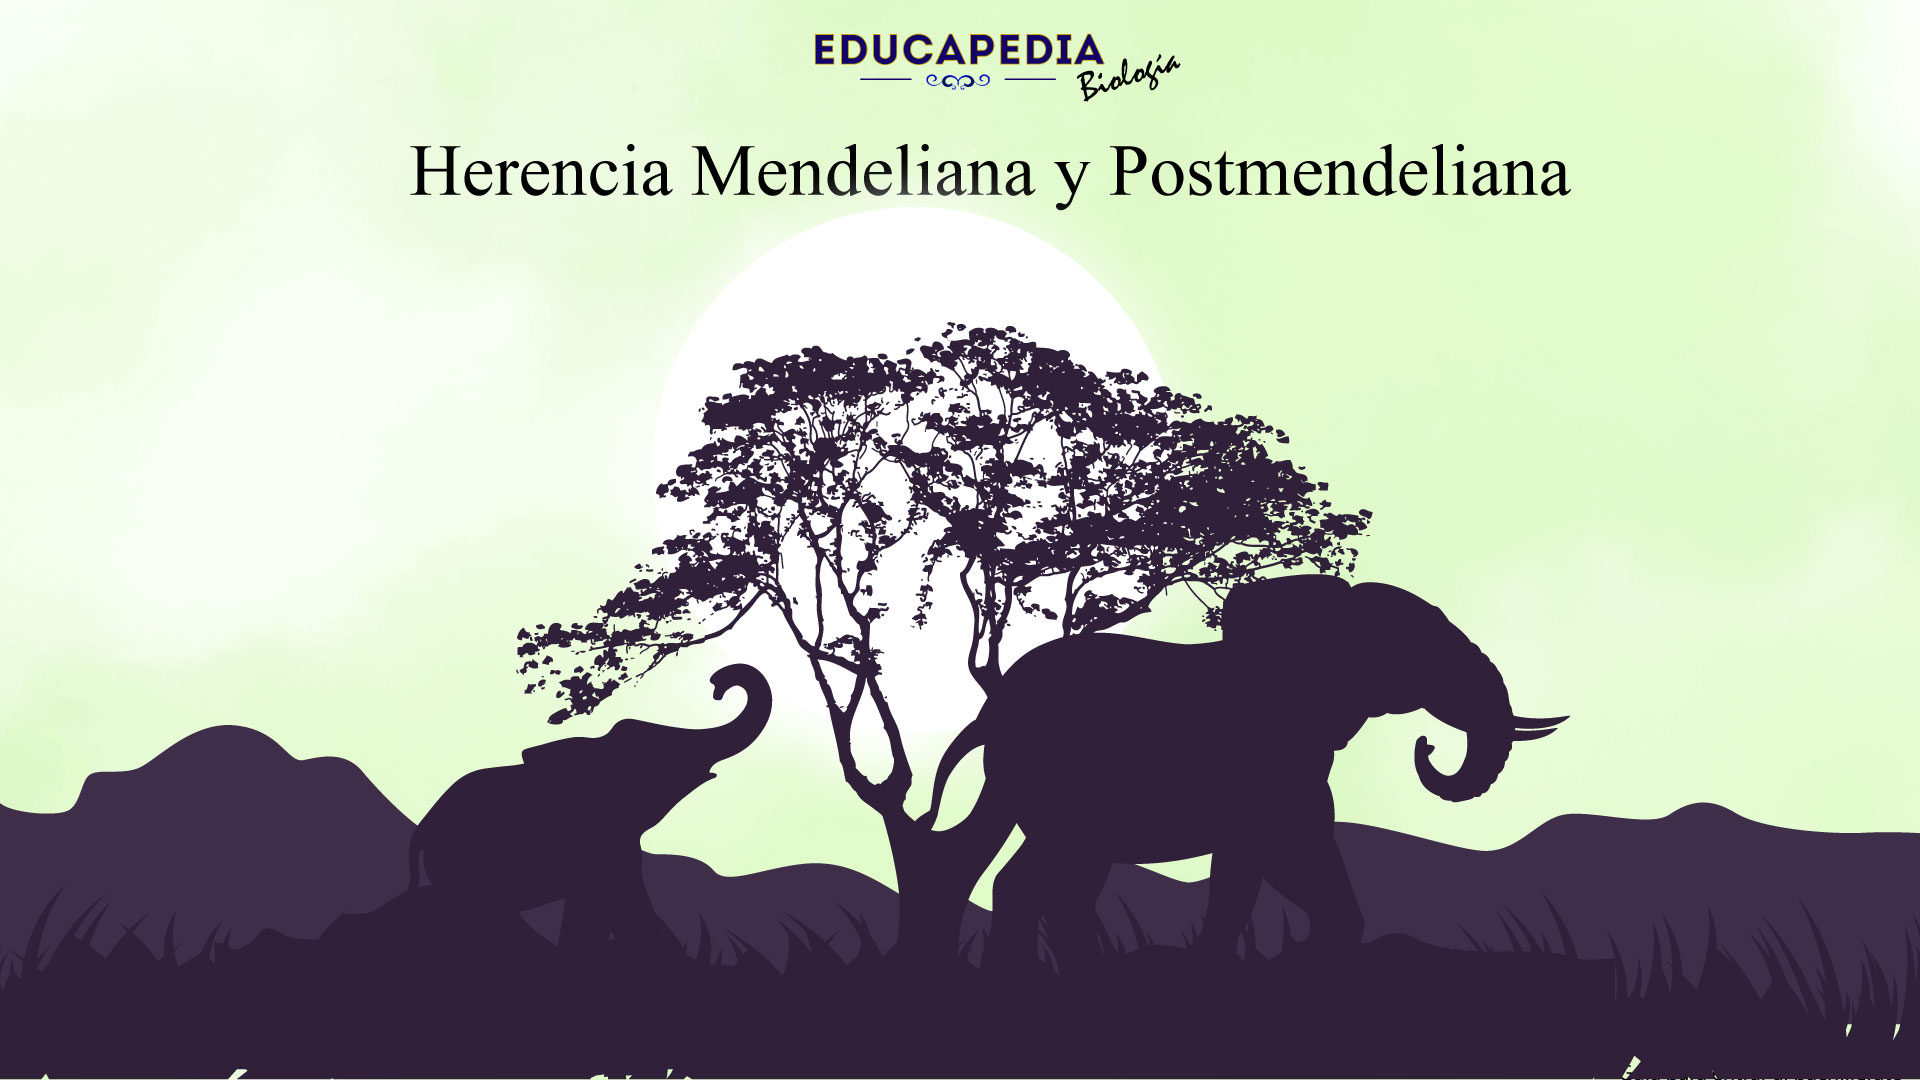 Herencia Mendeliana y Postmendeliana